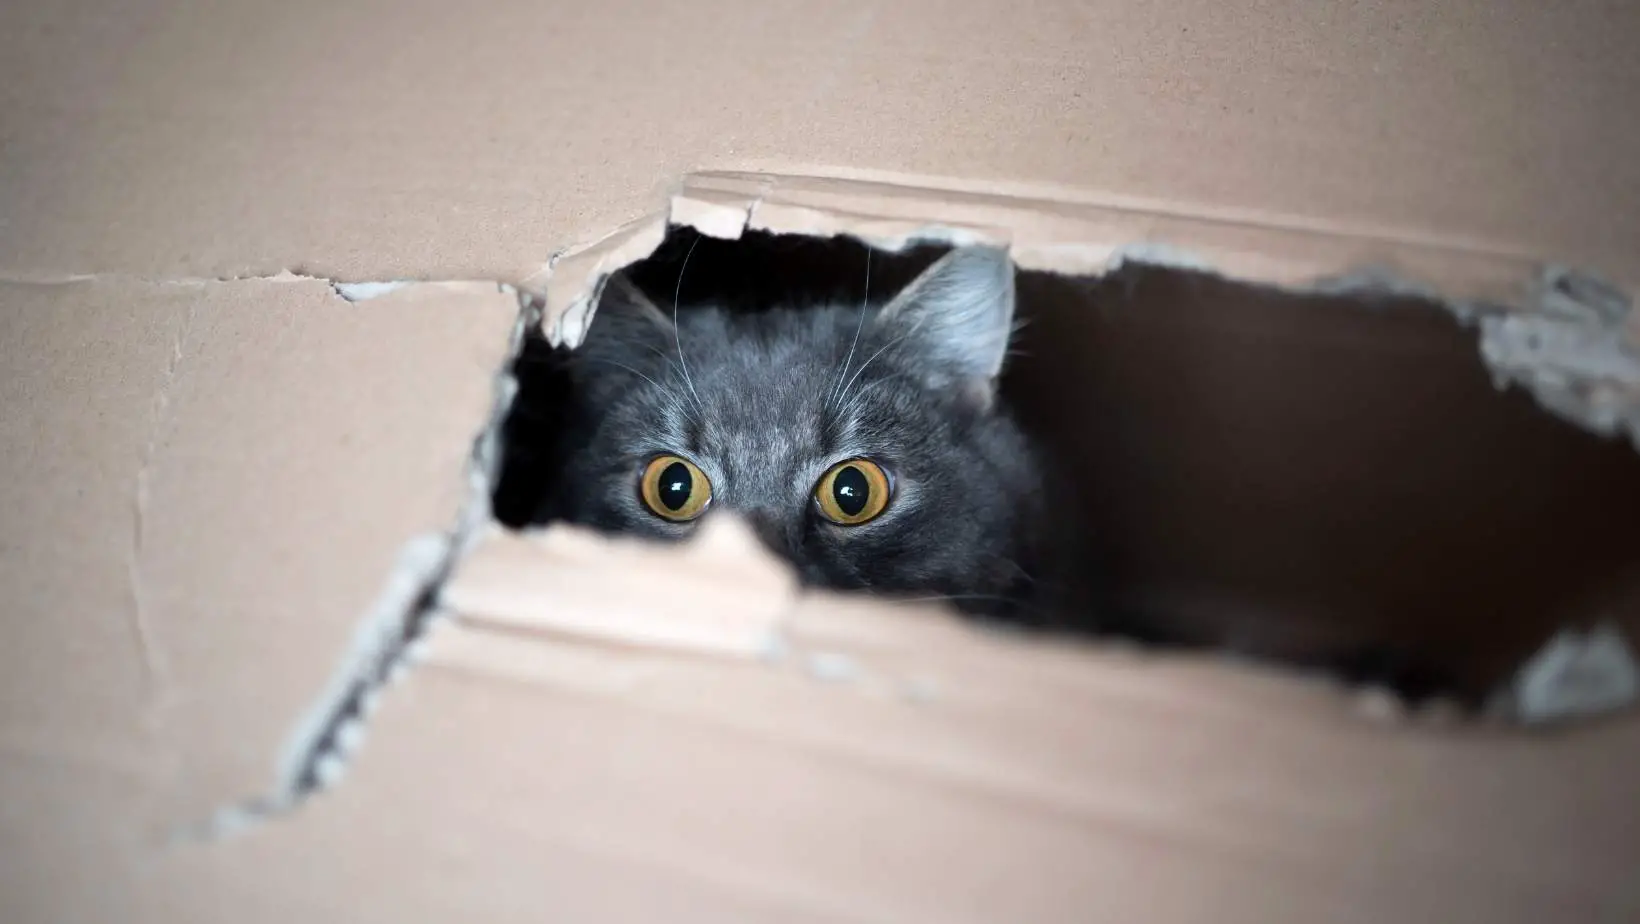 Why Do Cats Like Cardboard?